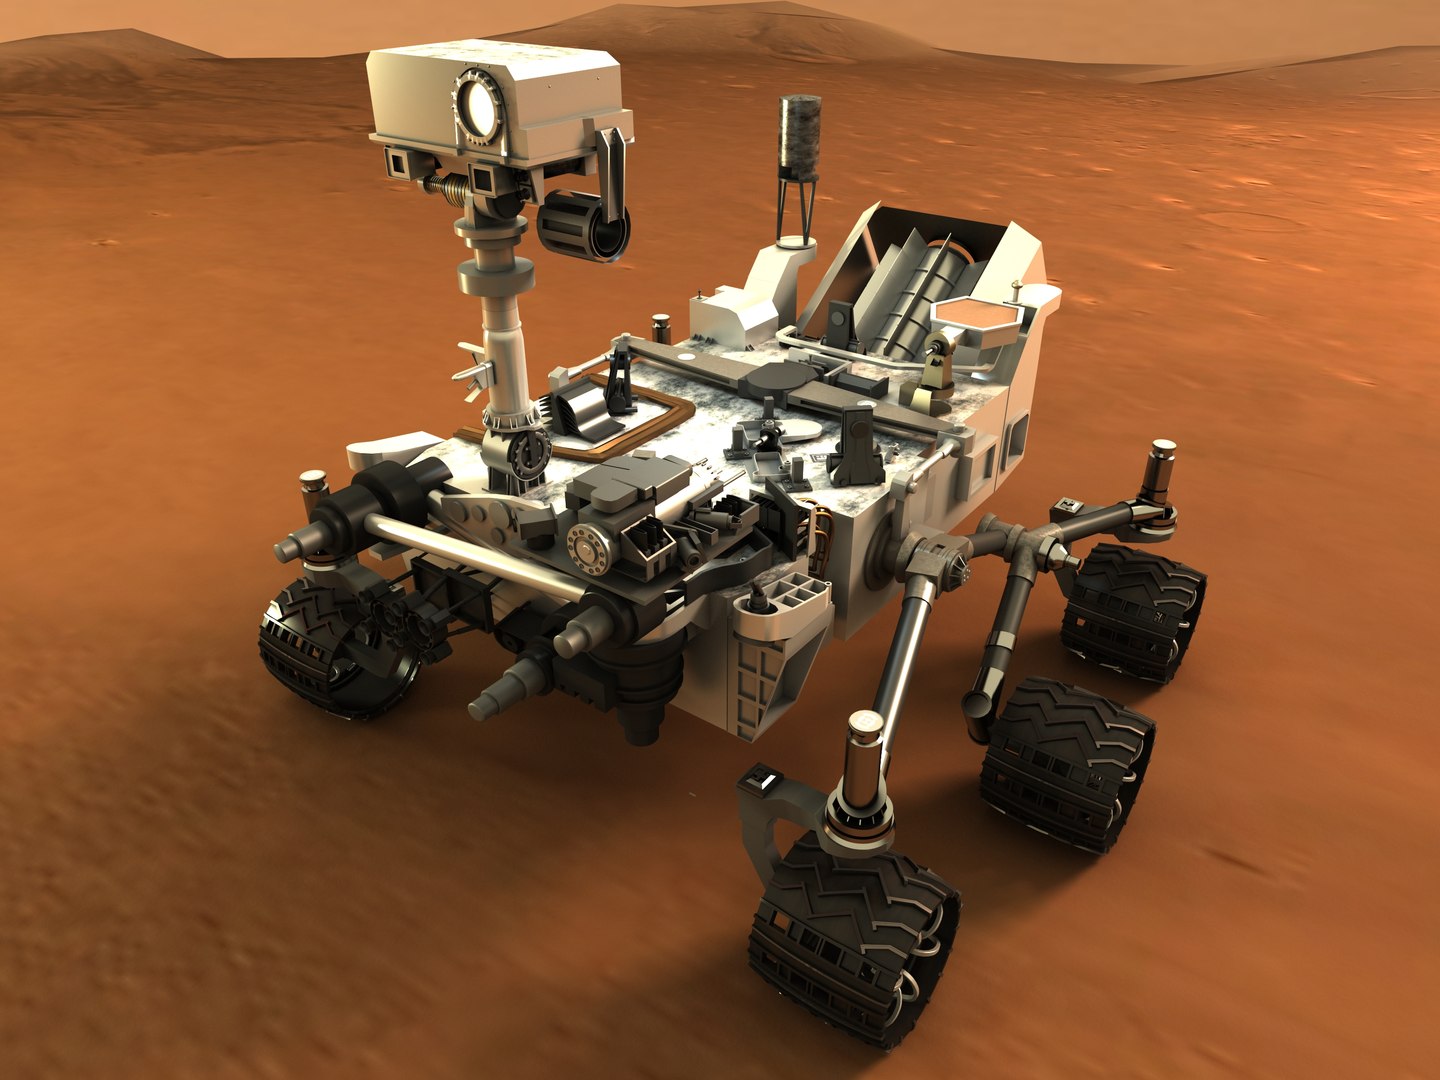 curiosity rover models